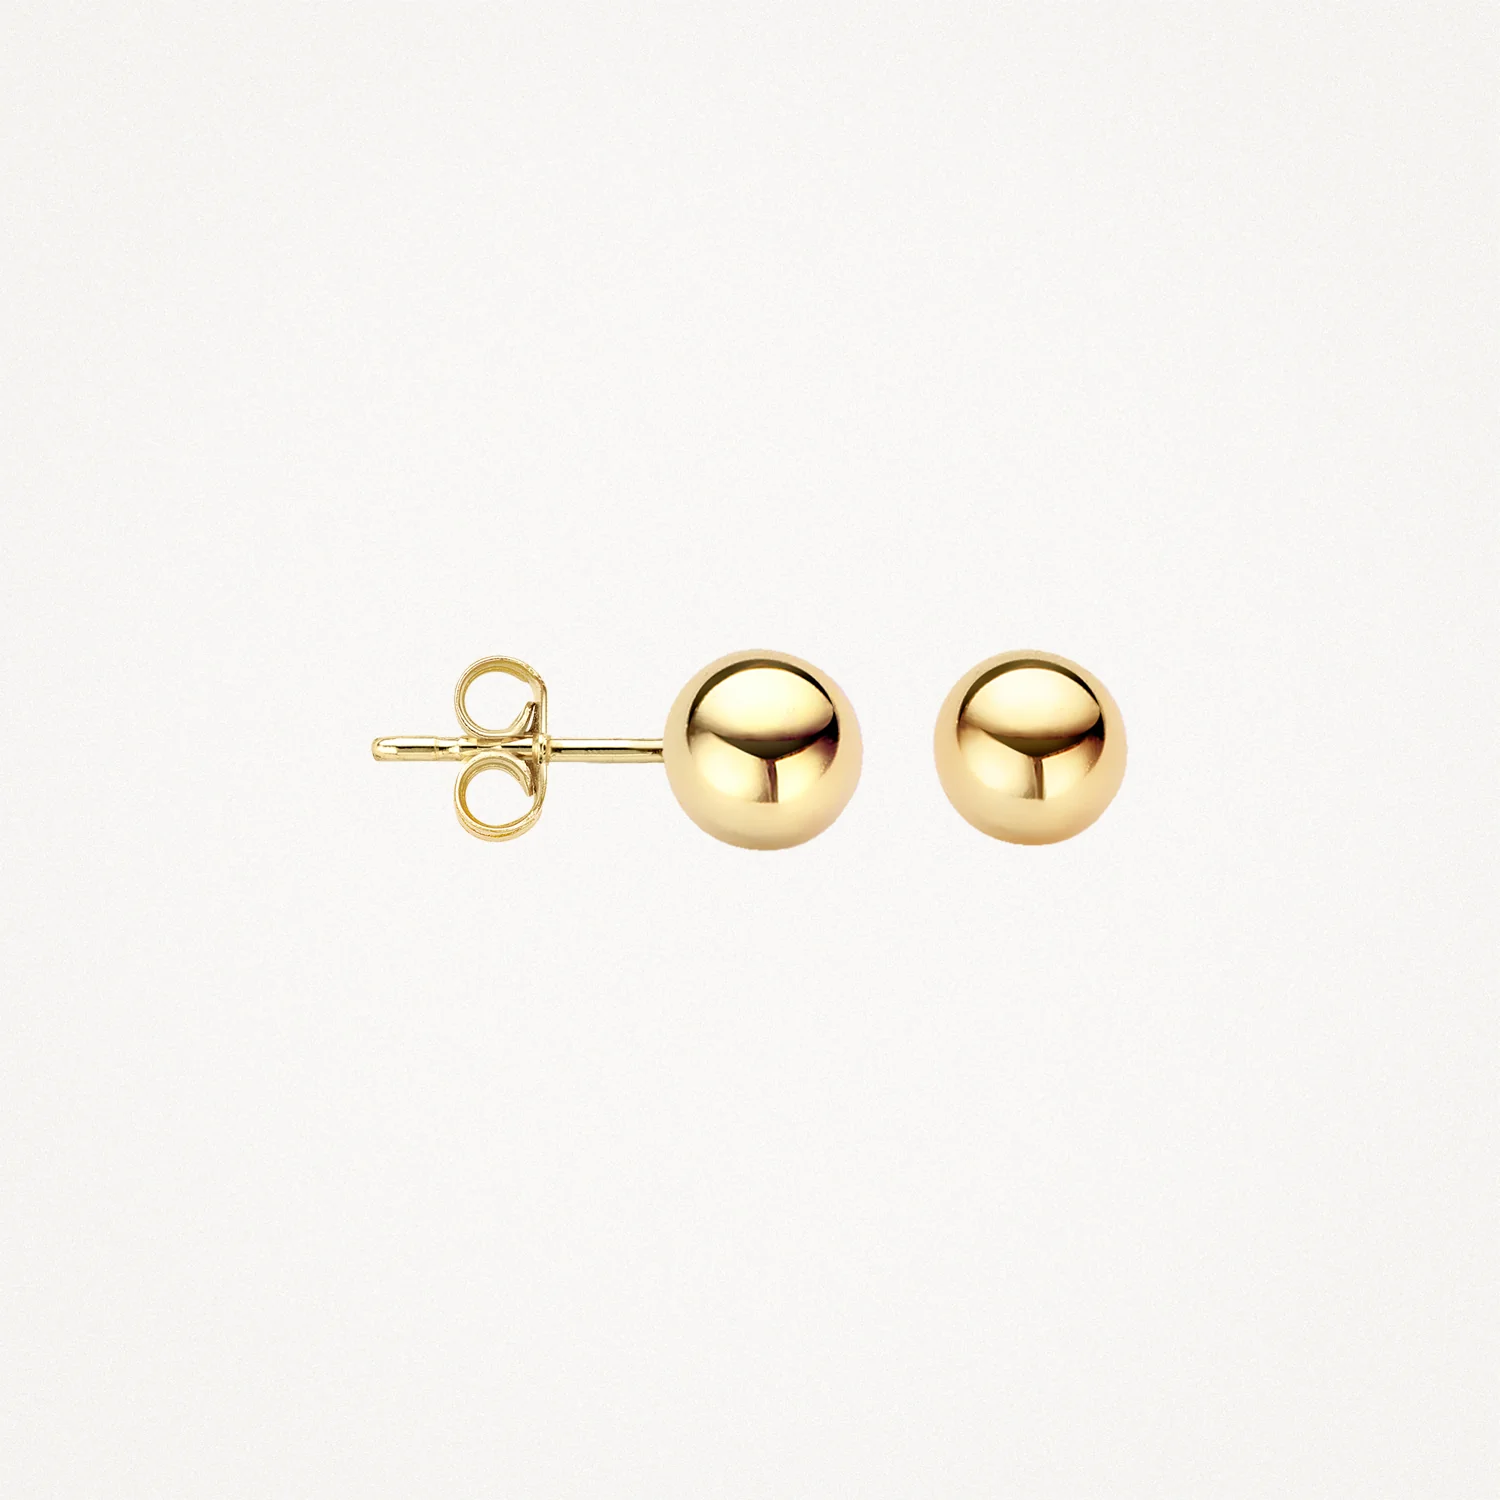 Blush Yellow Gold Ball Stud Earrings – Large